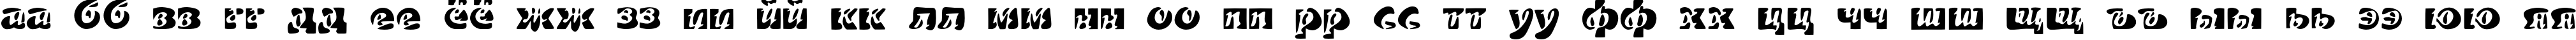 Пример написания русского алфавита шрифтом Duetto